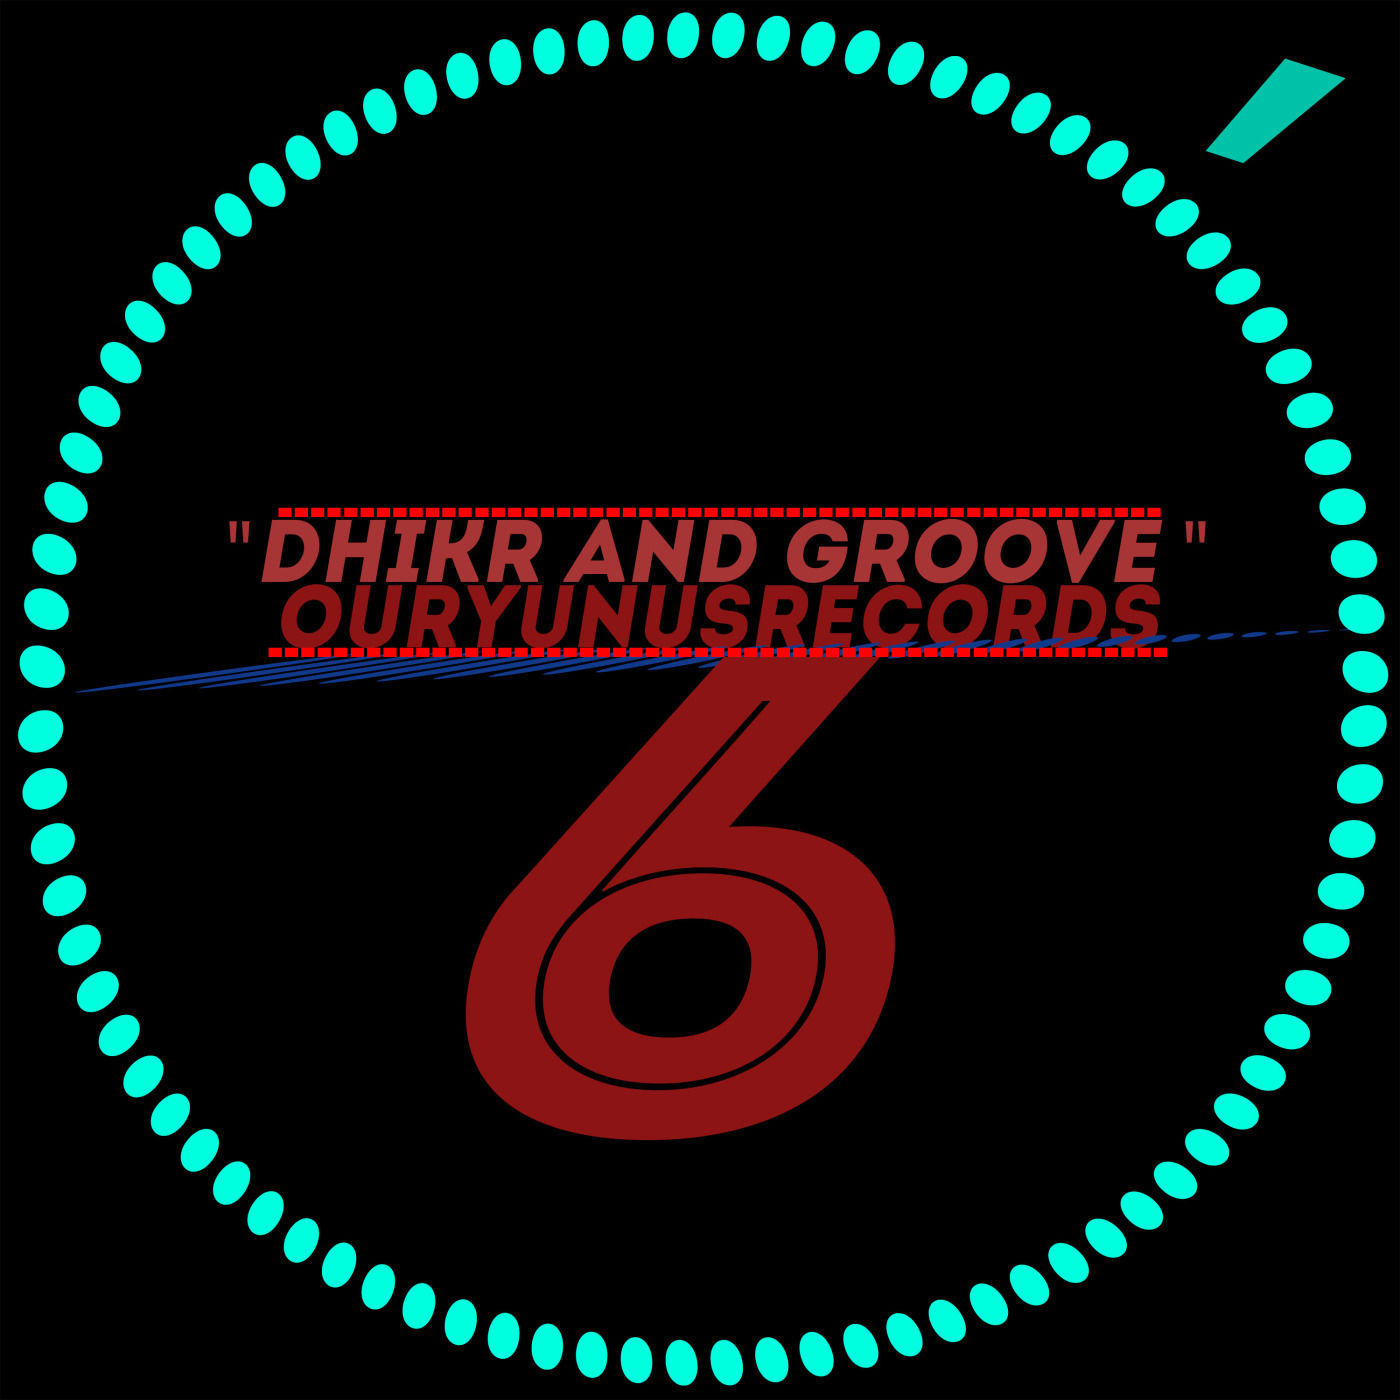 Jonasclean - Dhikr and Groove 6 / Our Yunus